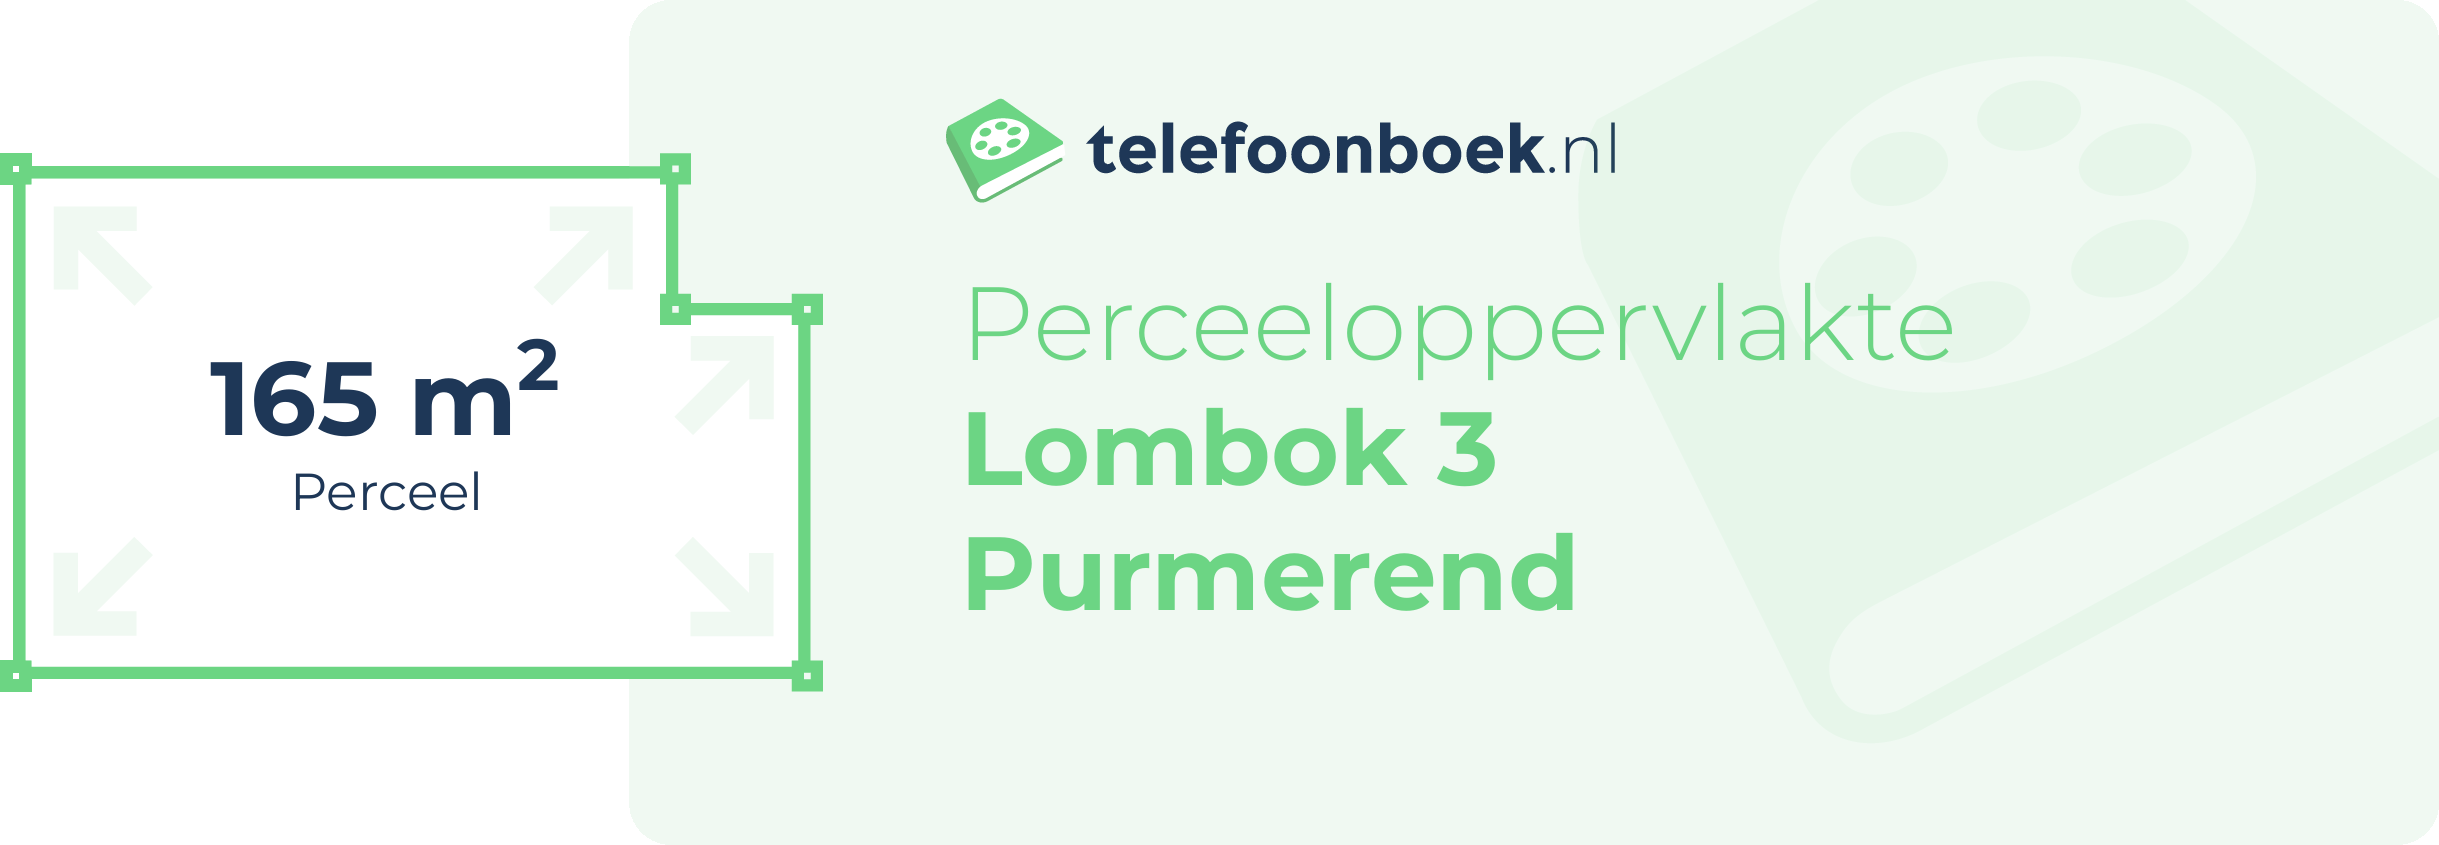 Perceeloppervlakte Lombok 3 Purmerend